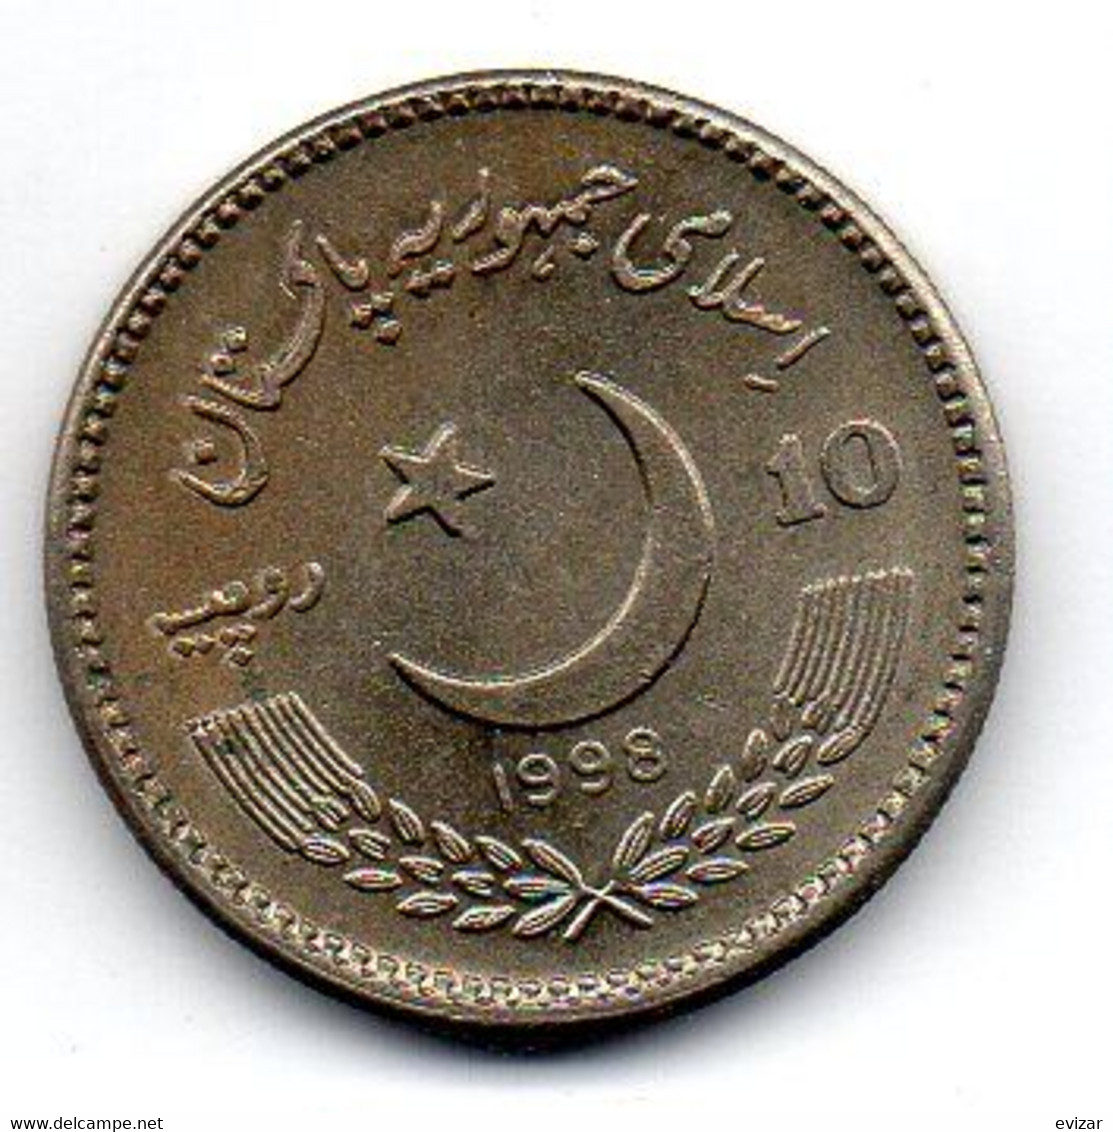 PAKISTAN, 10 Rupees, Copper-Nickel, Year 1998, KM #61 - Pakistan